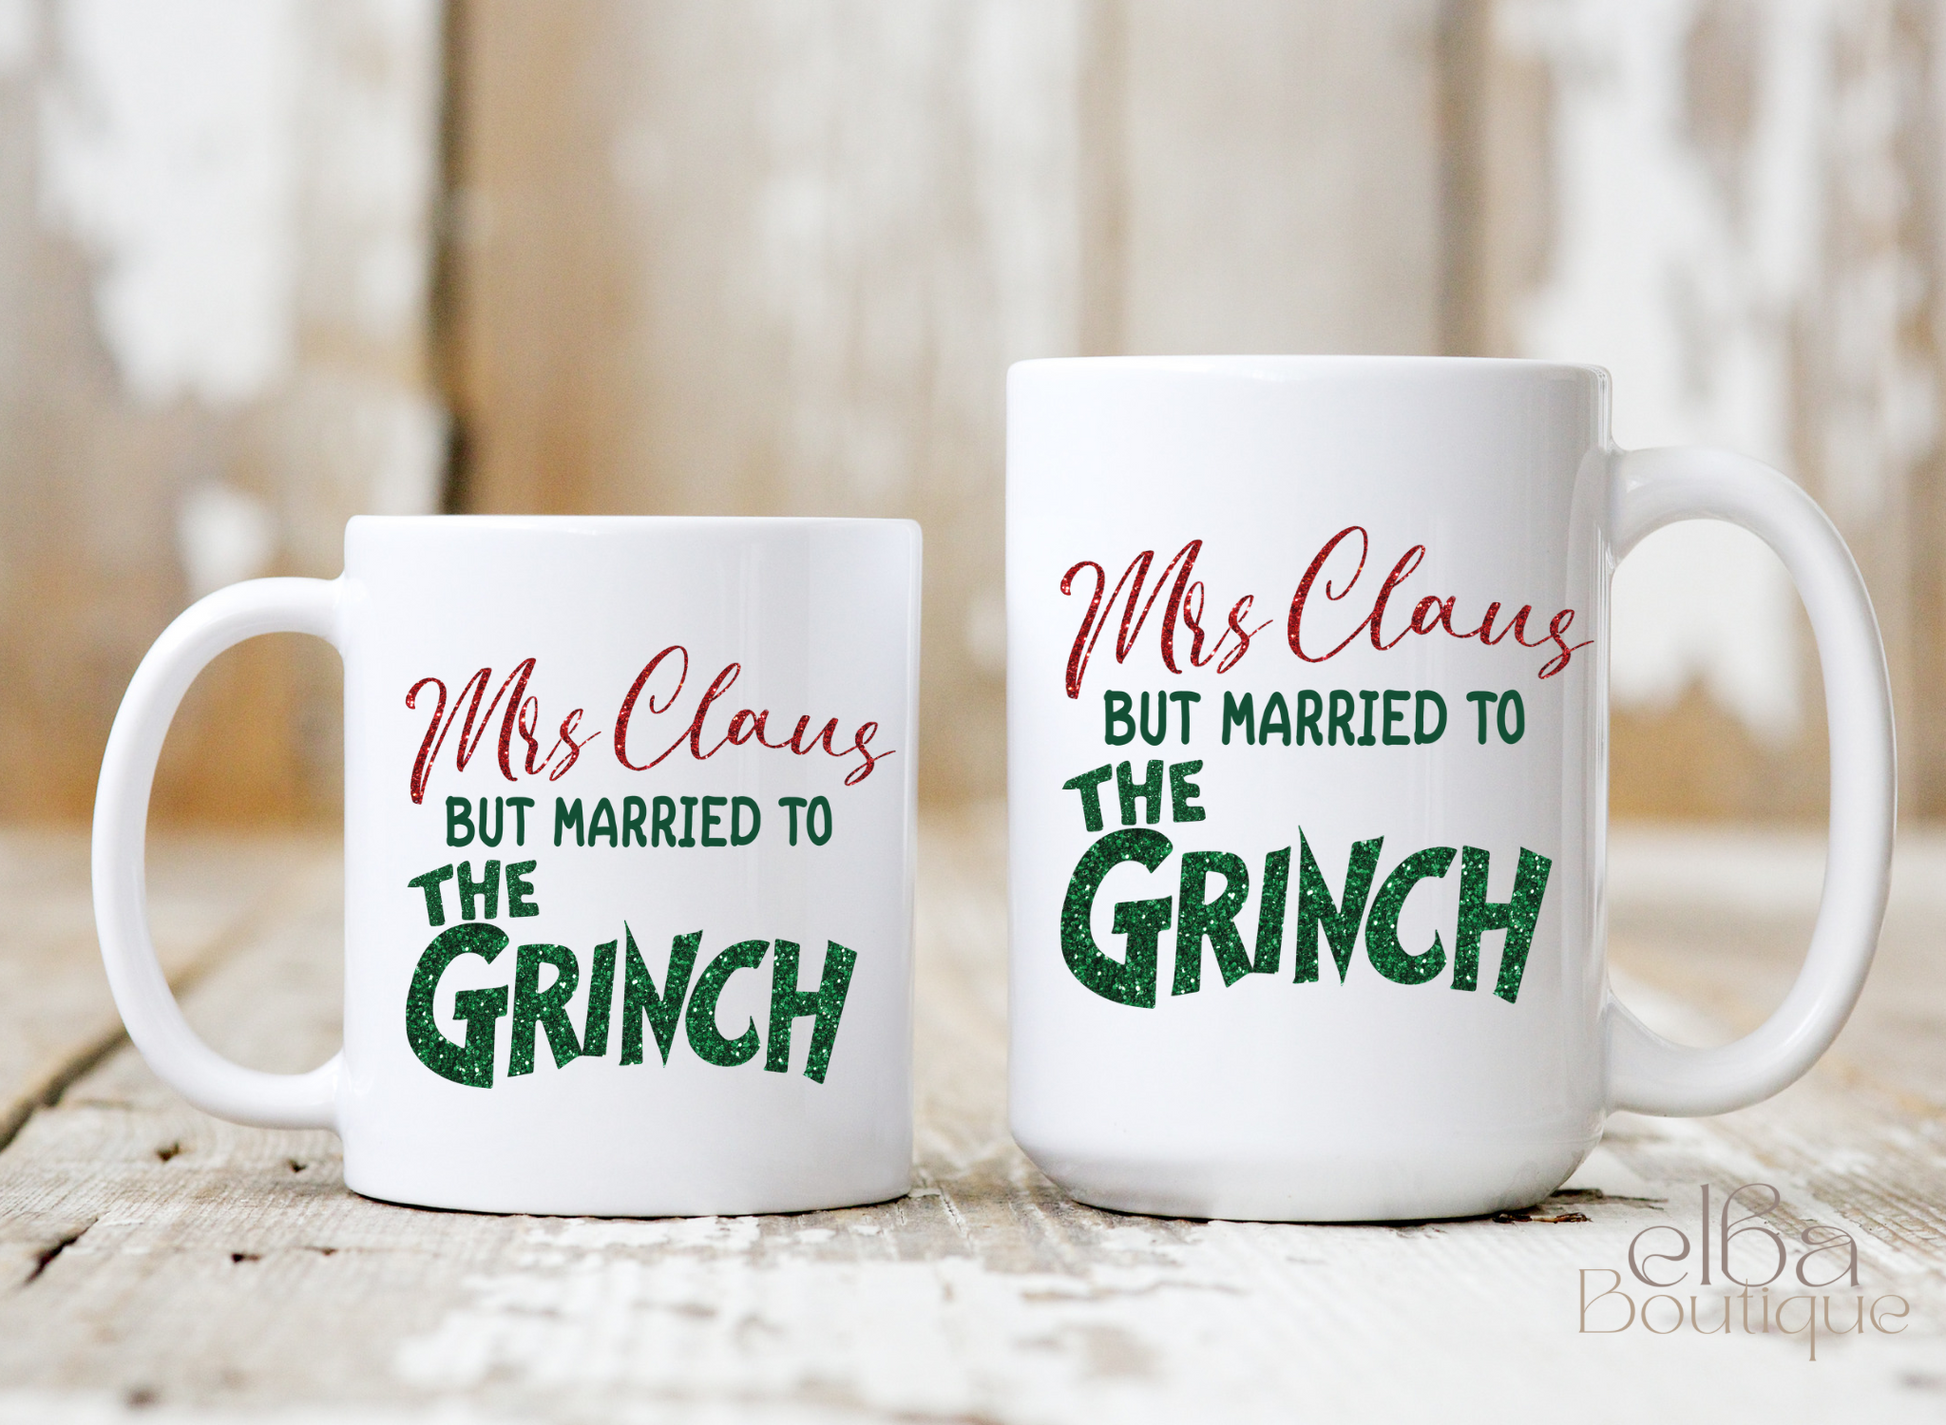 The Grinch Ceramic Mug 15 Oz, Holiday Mugs, the Grinch Mugs